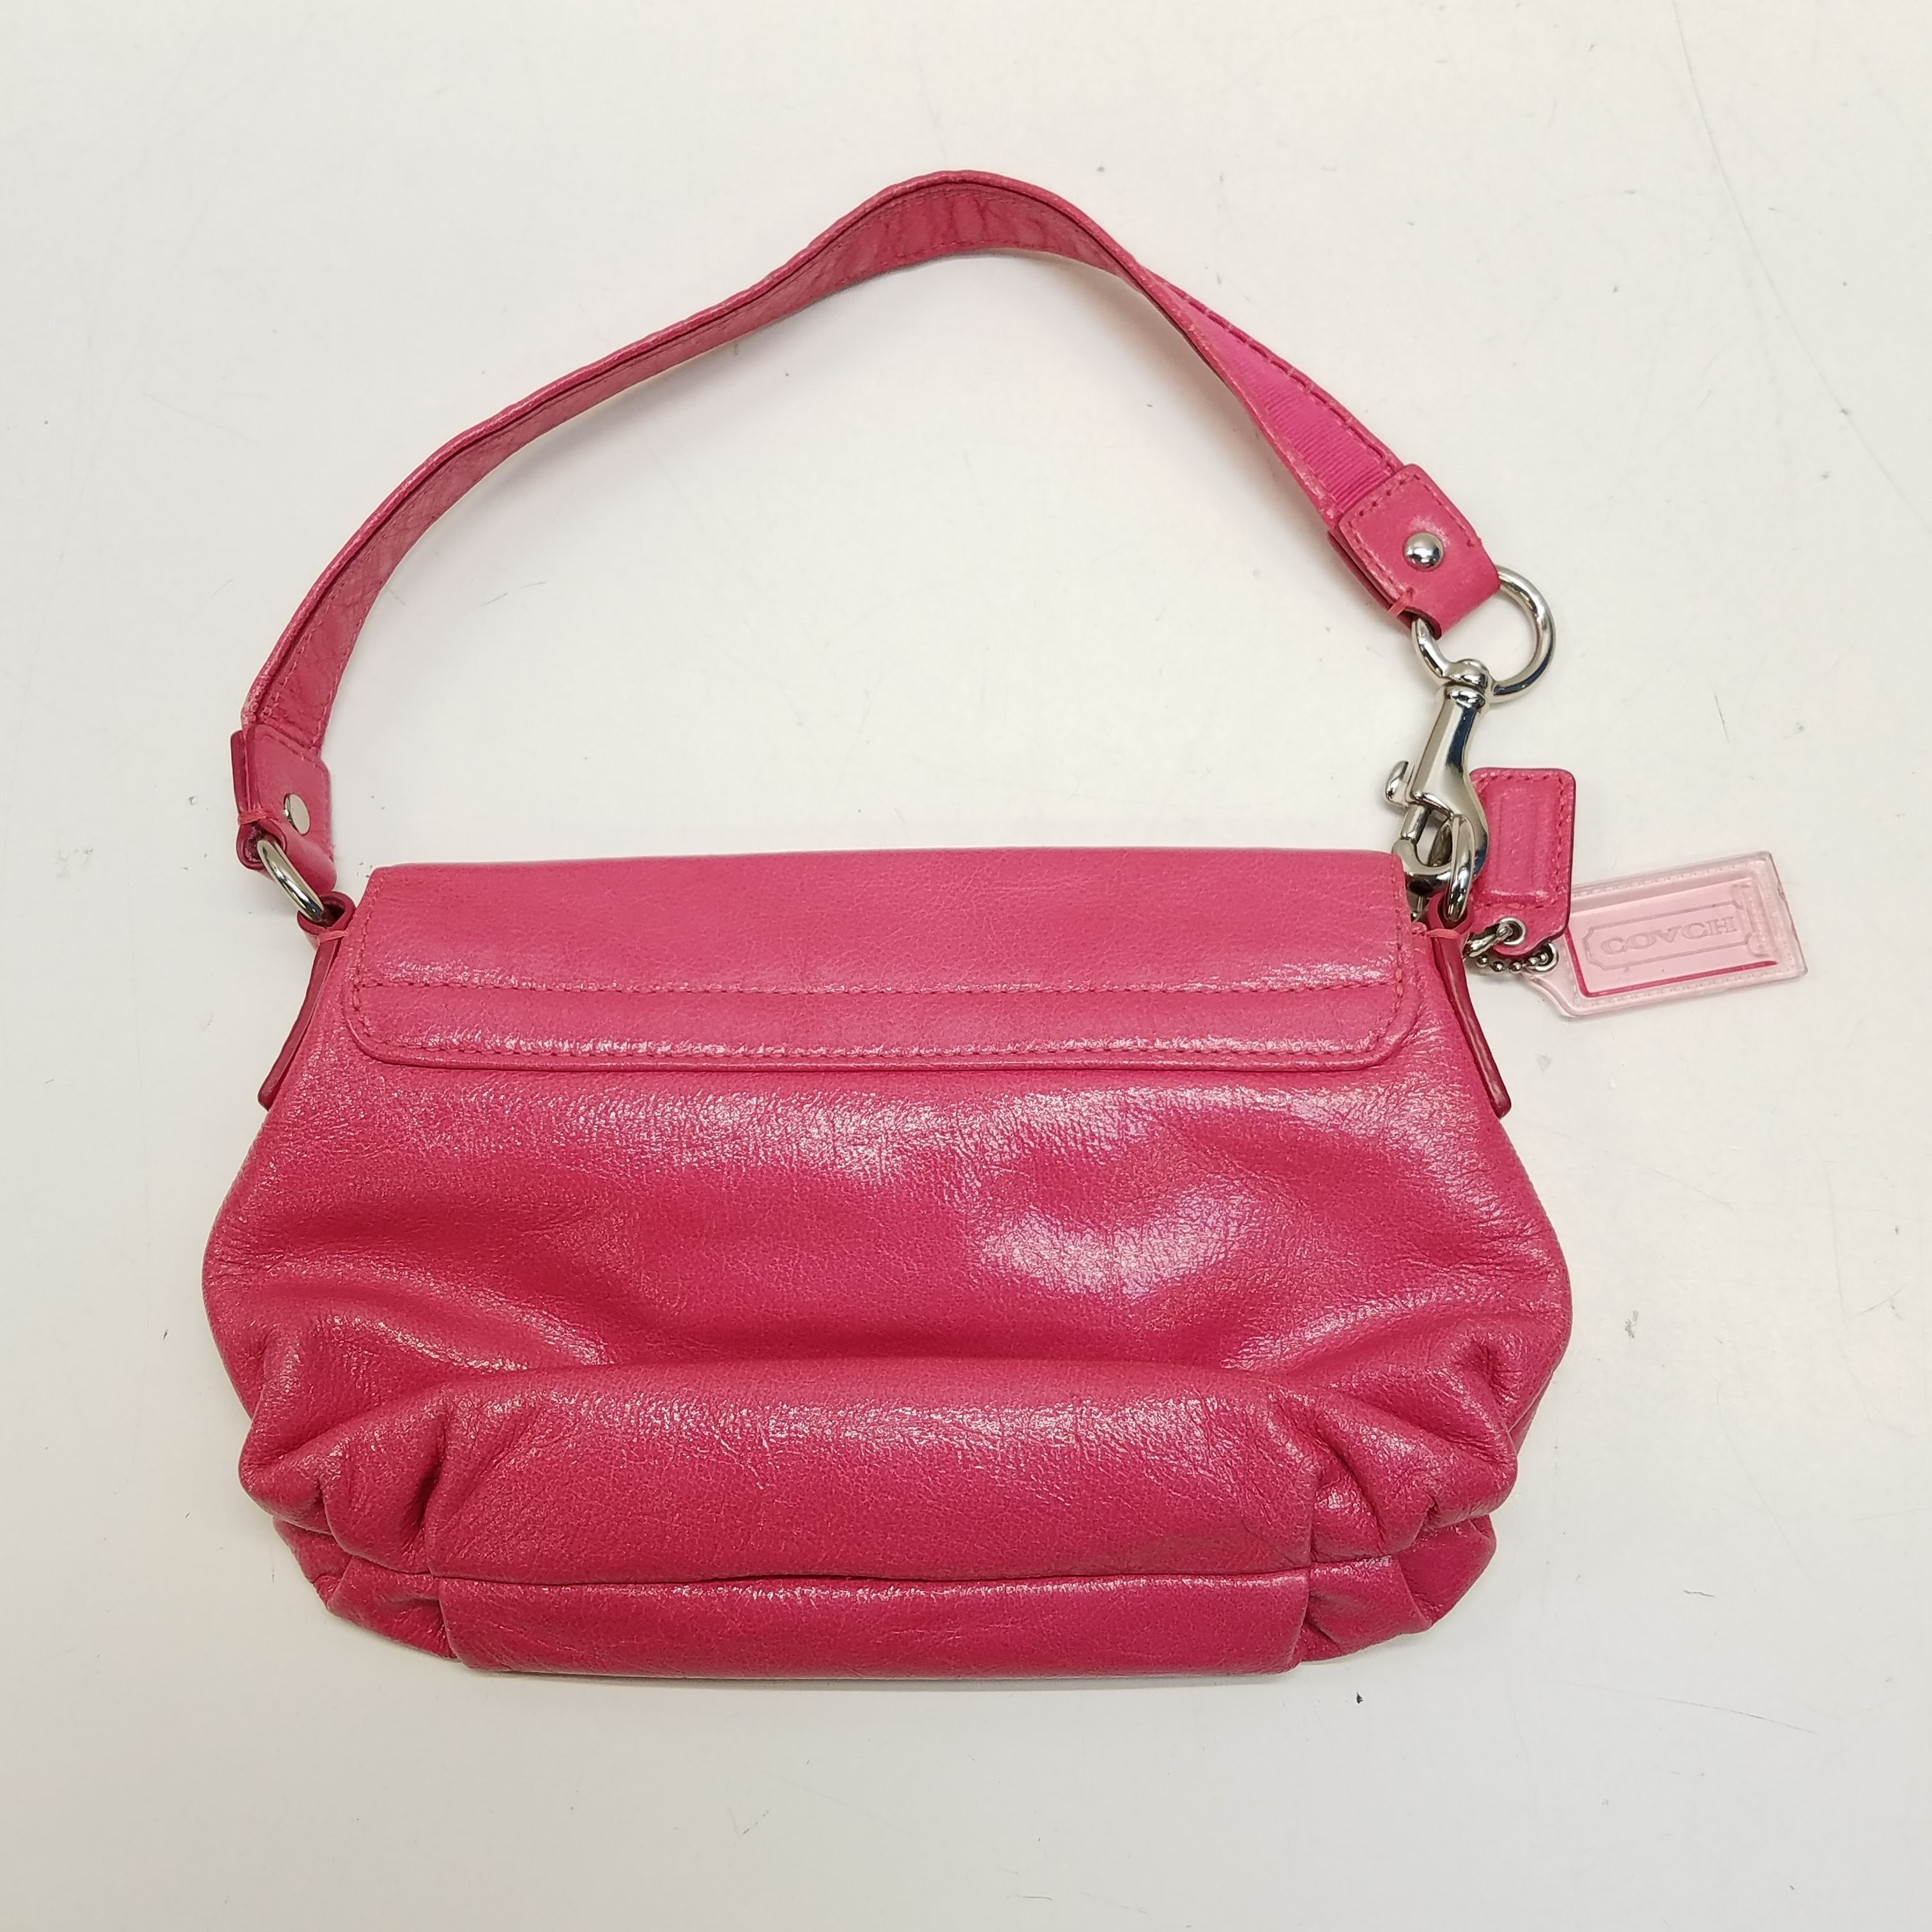 Coach leather Mini Rory satchel fuchsia hot pink